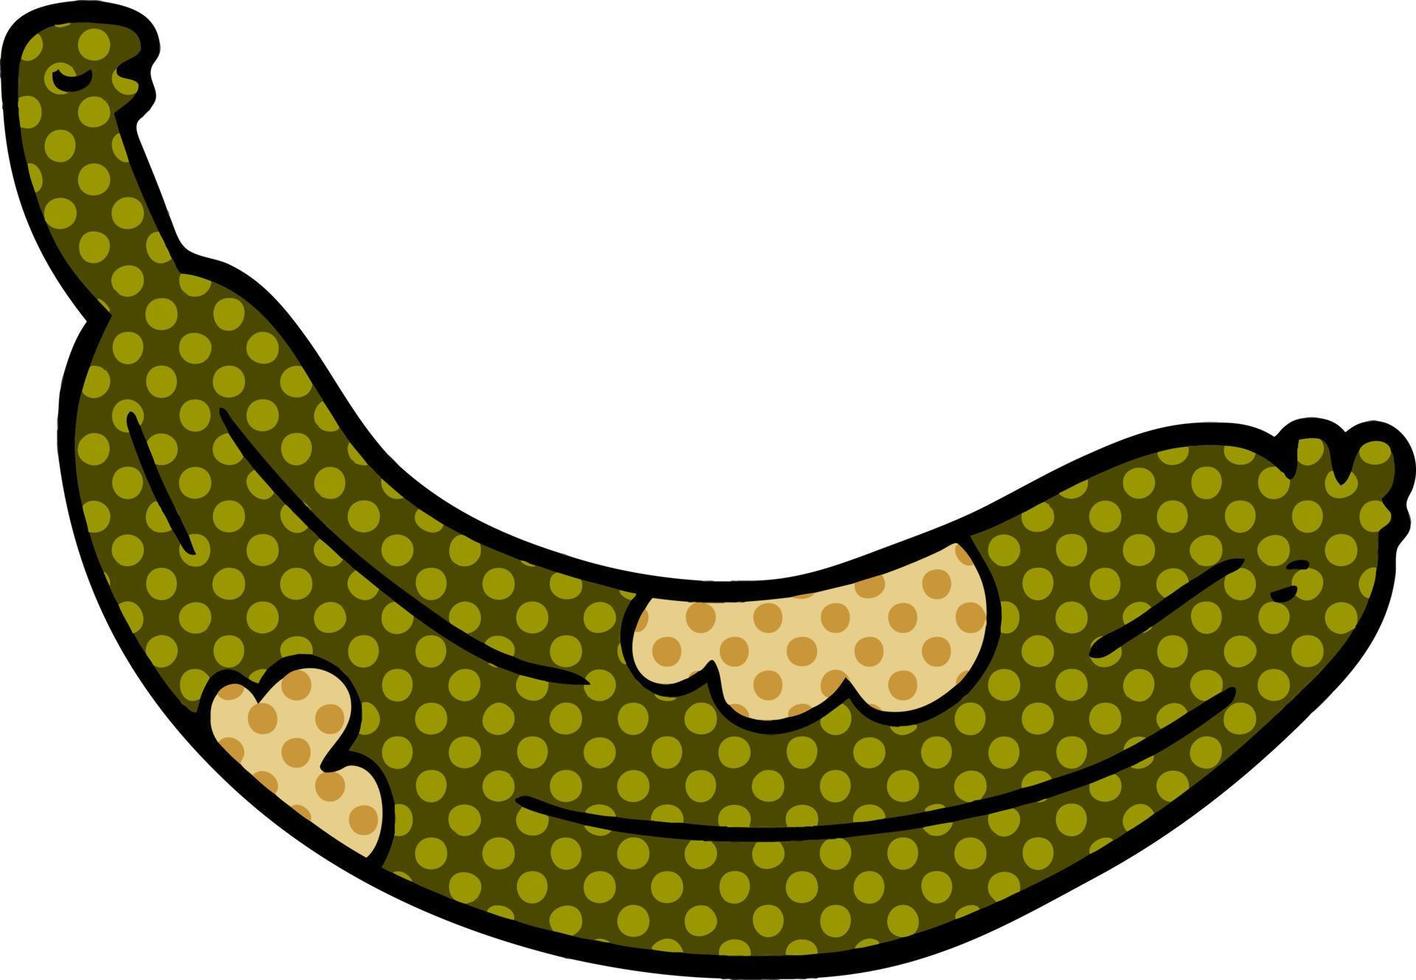 desenho animado doodle banana podre vetor